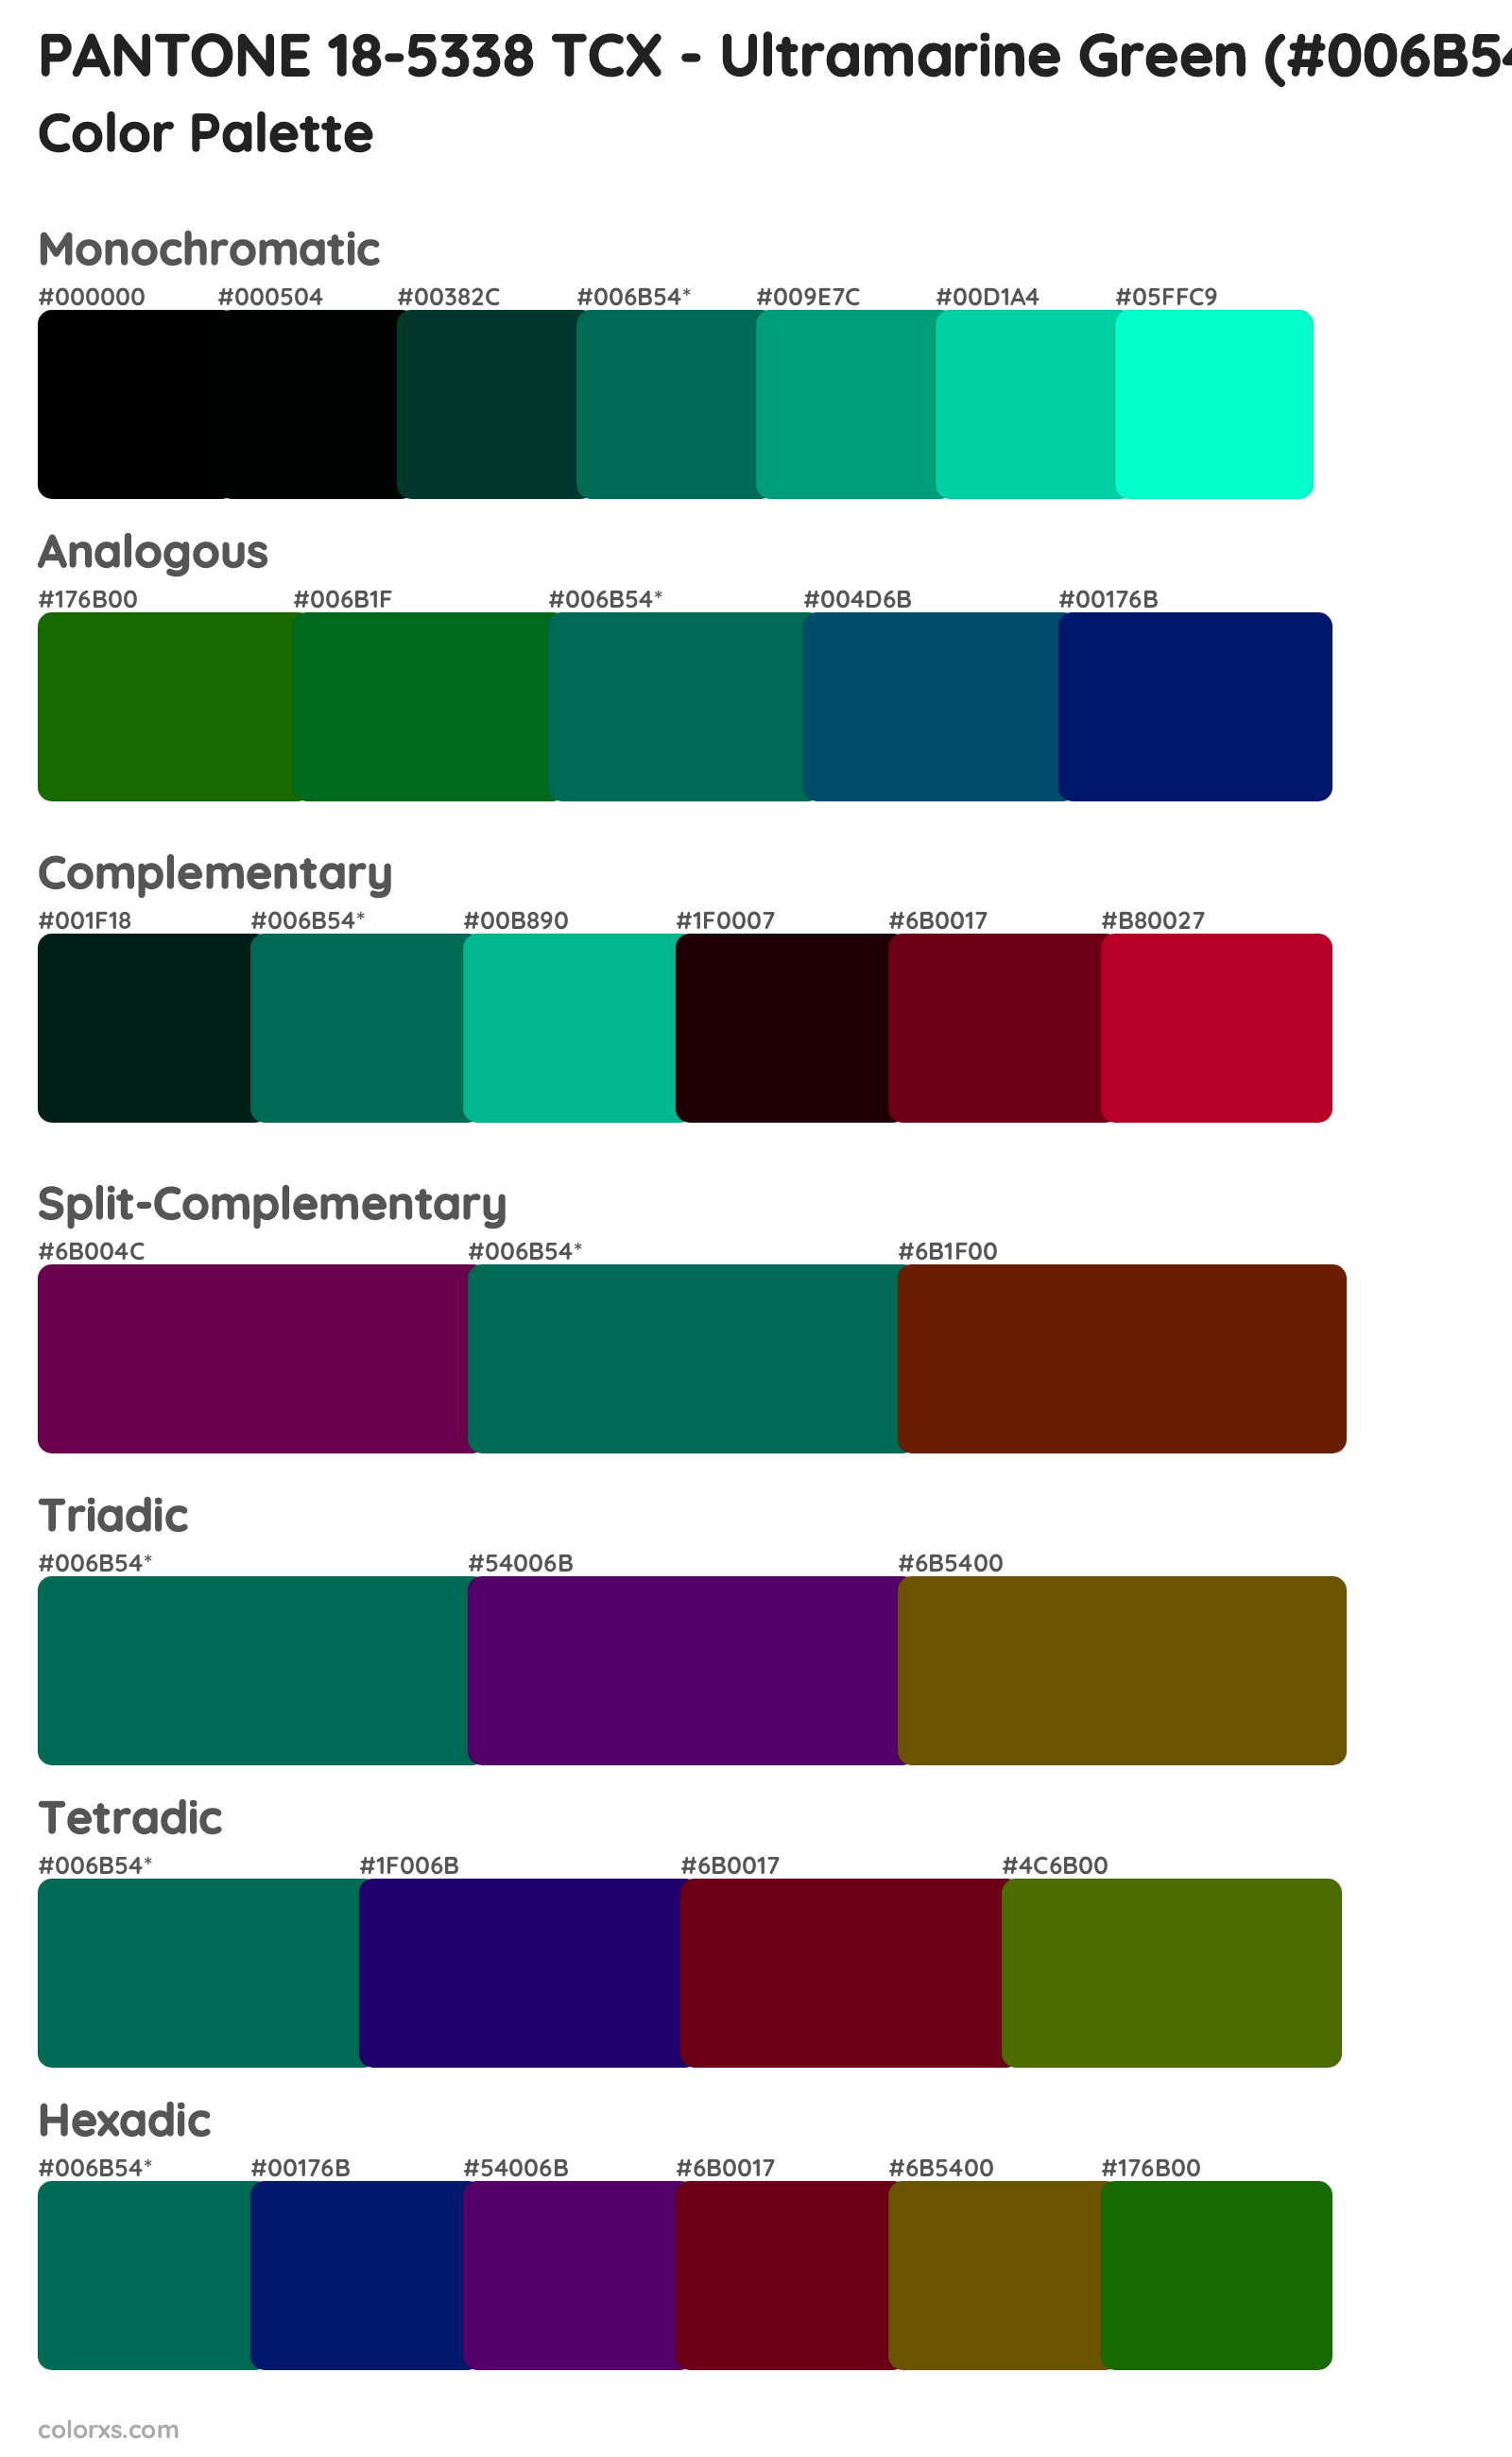 PANTONE 18-5338 TCX - Ultramarine Green Color Scheme Palettes